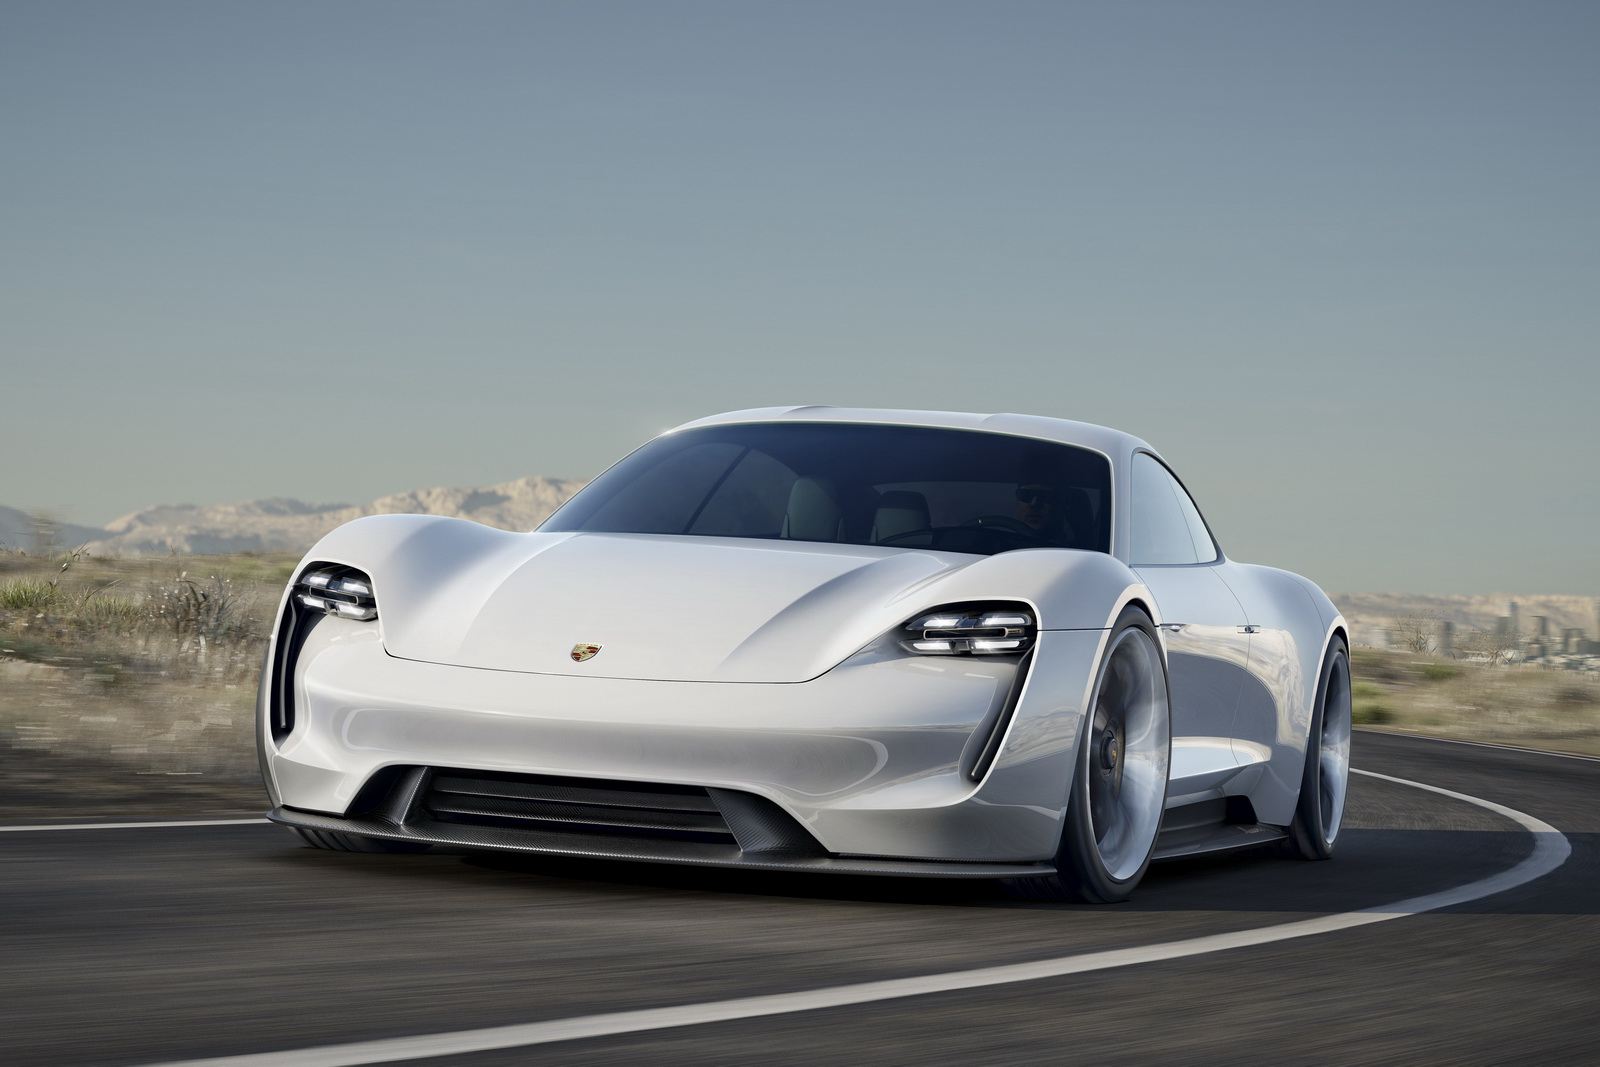 Porsche konceptbil er en Tesla Model S rival!